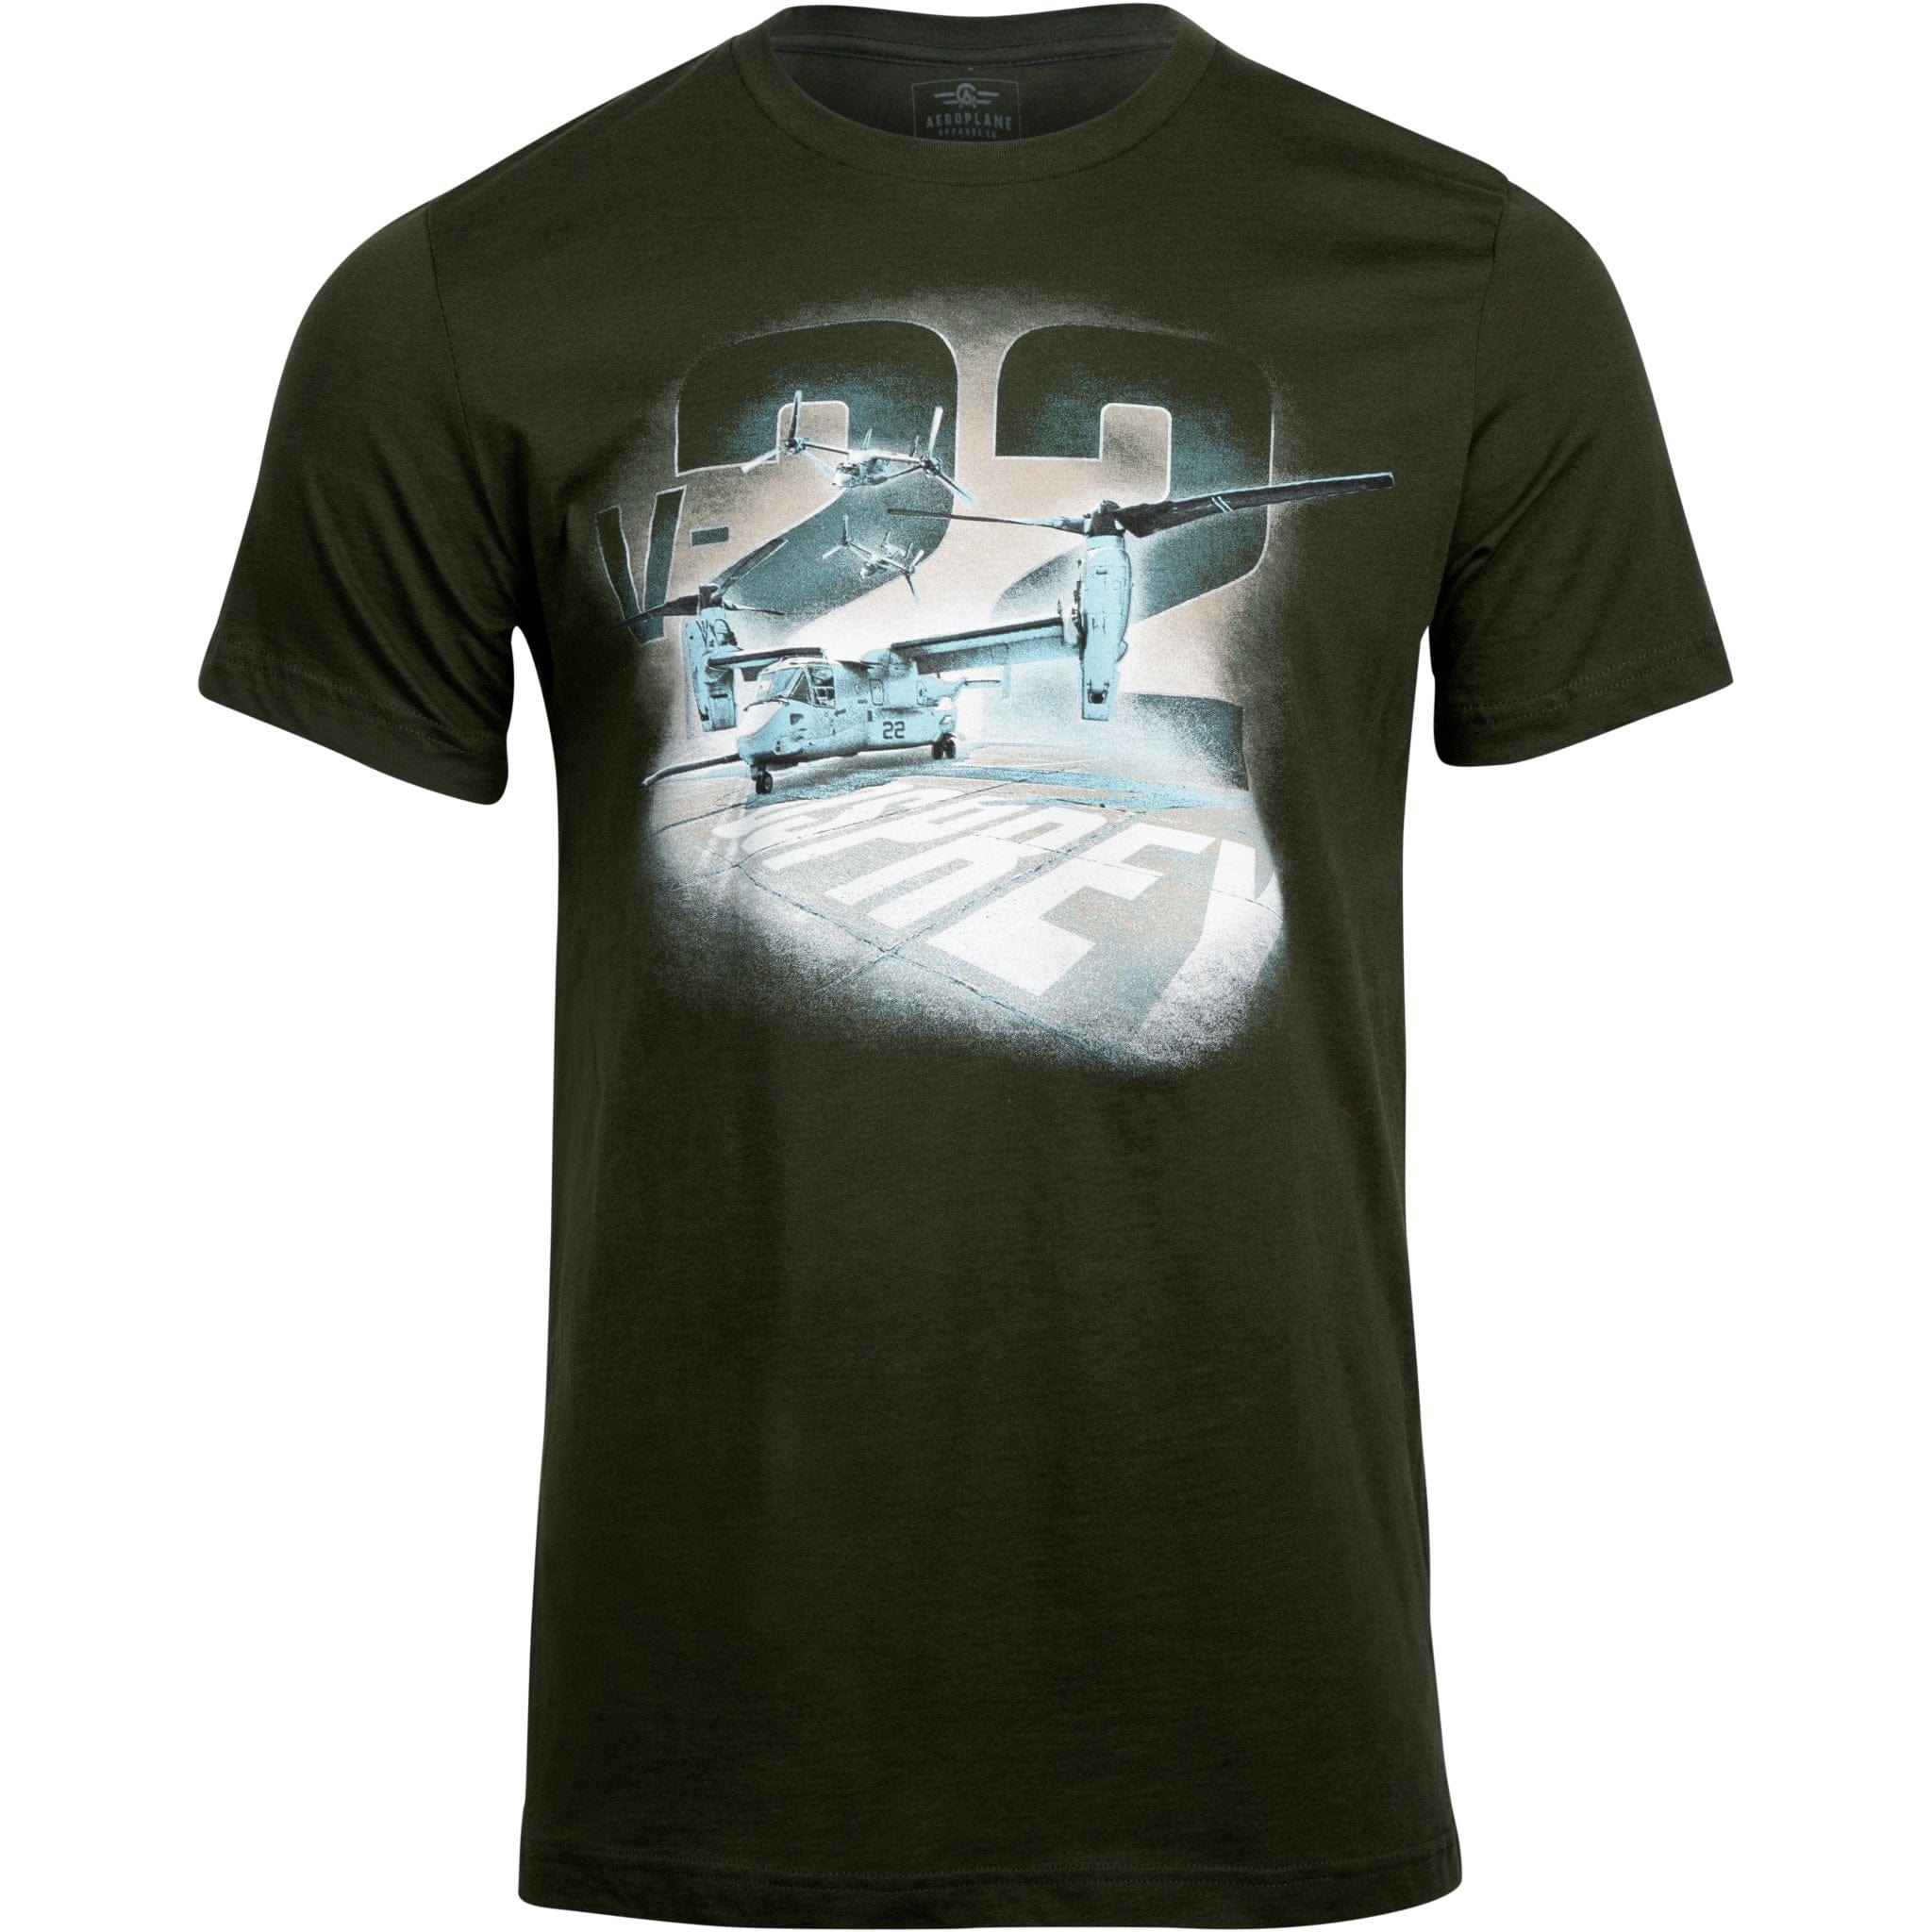 V-22 Osprey Officially Licensed Aeroplane Apparel Co. Men's T-Shirt